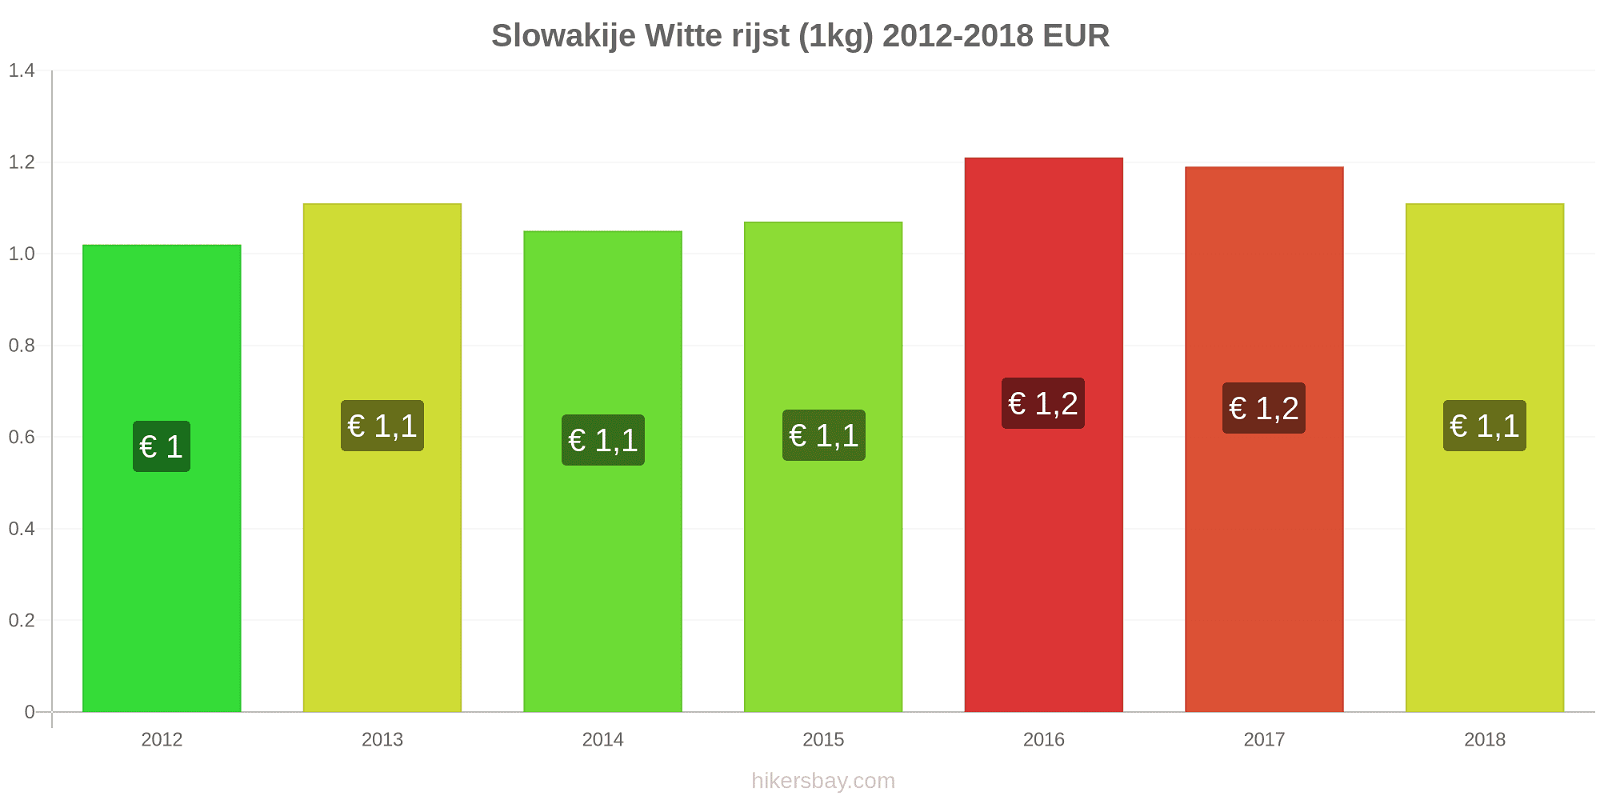 Slowakije prijswijzigingen Rijst (wit) (1kg) hikersbay.com